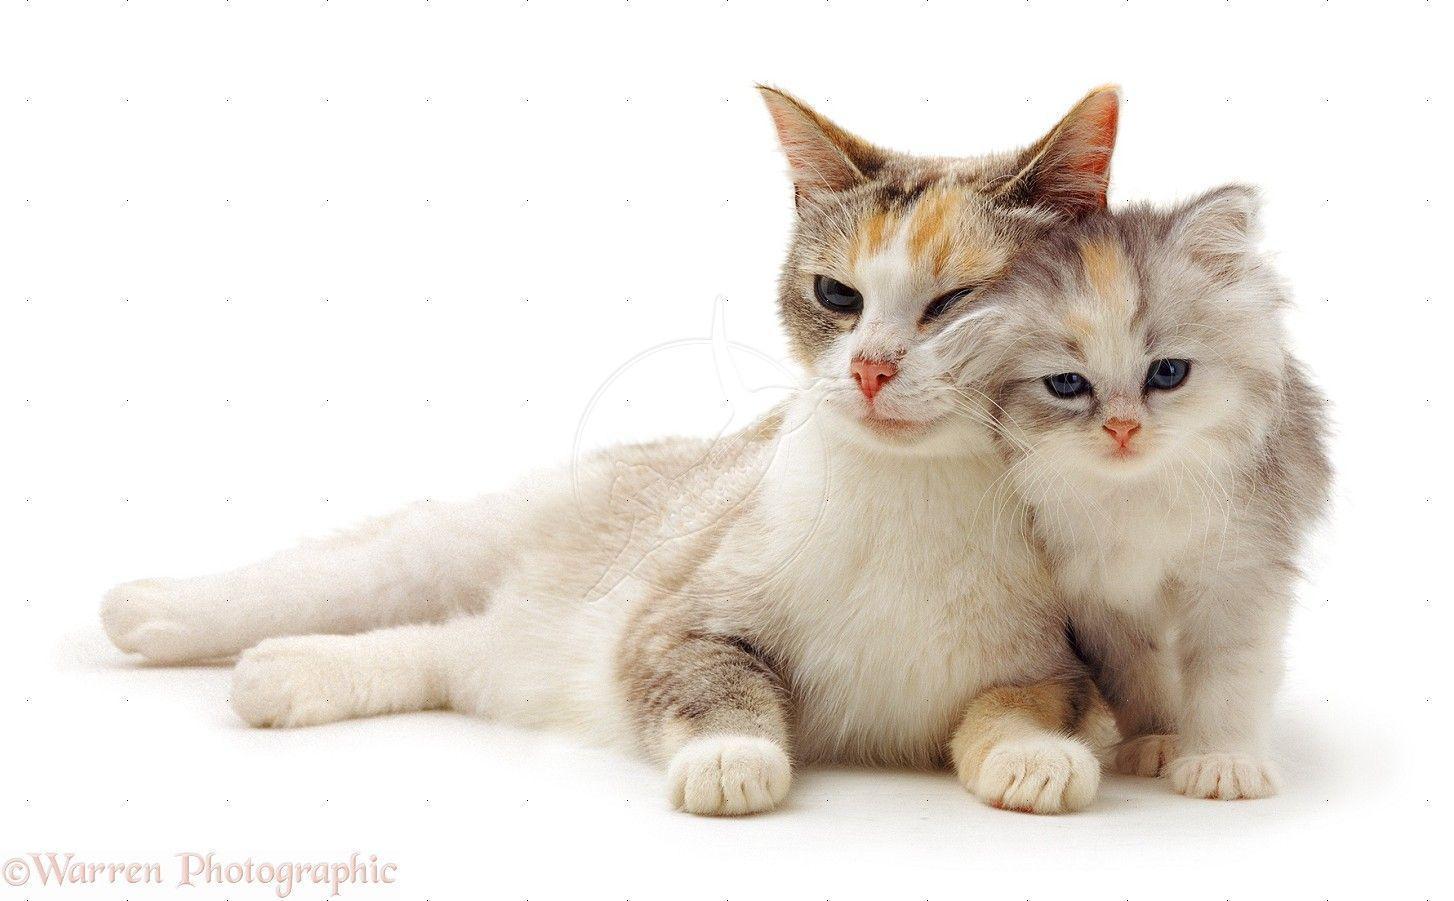 Cute cat and kitten photo